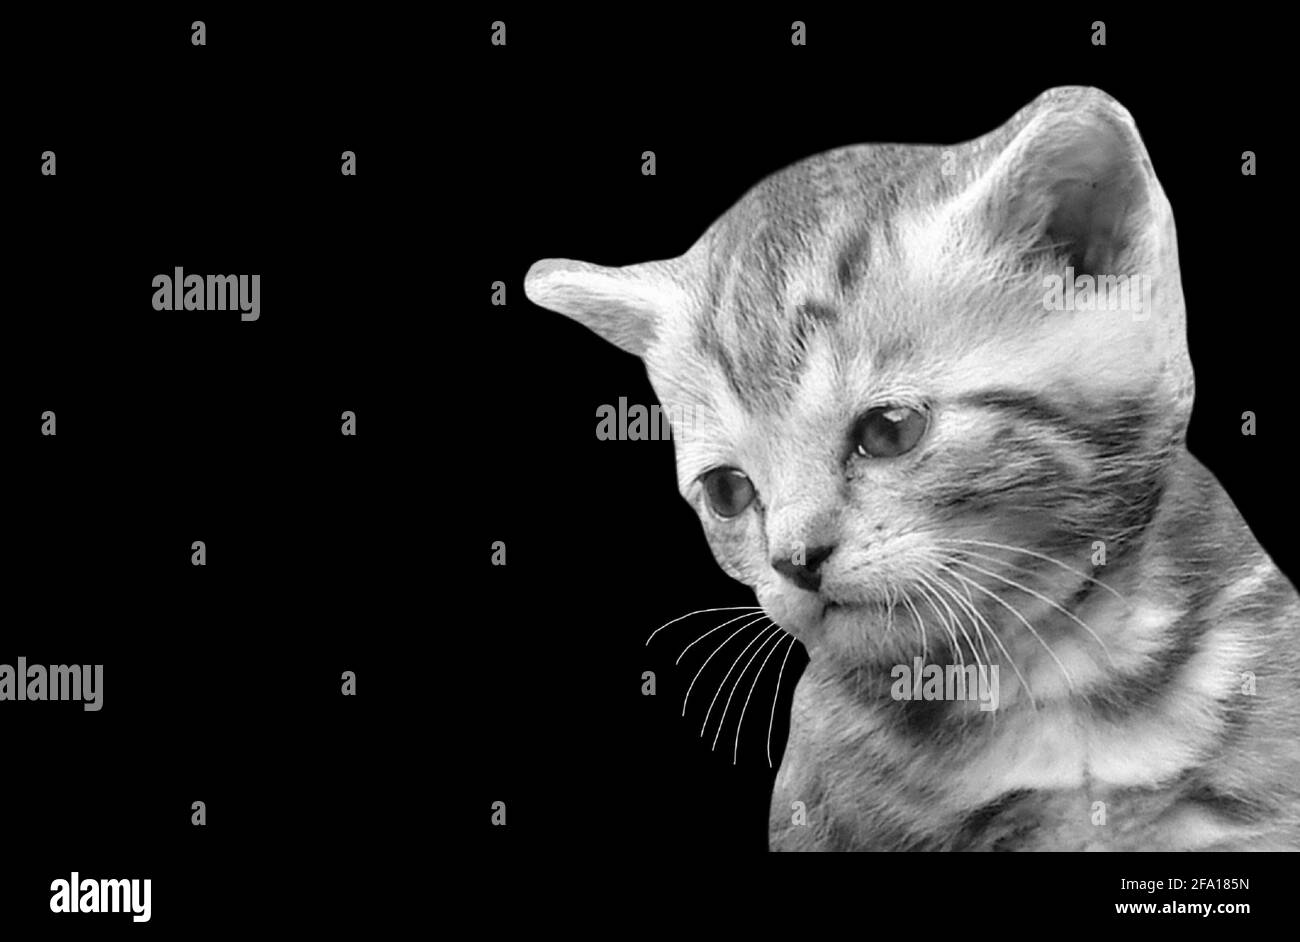 Cute Little Kitten Closeup Face In The Black Background Stock Photo